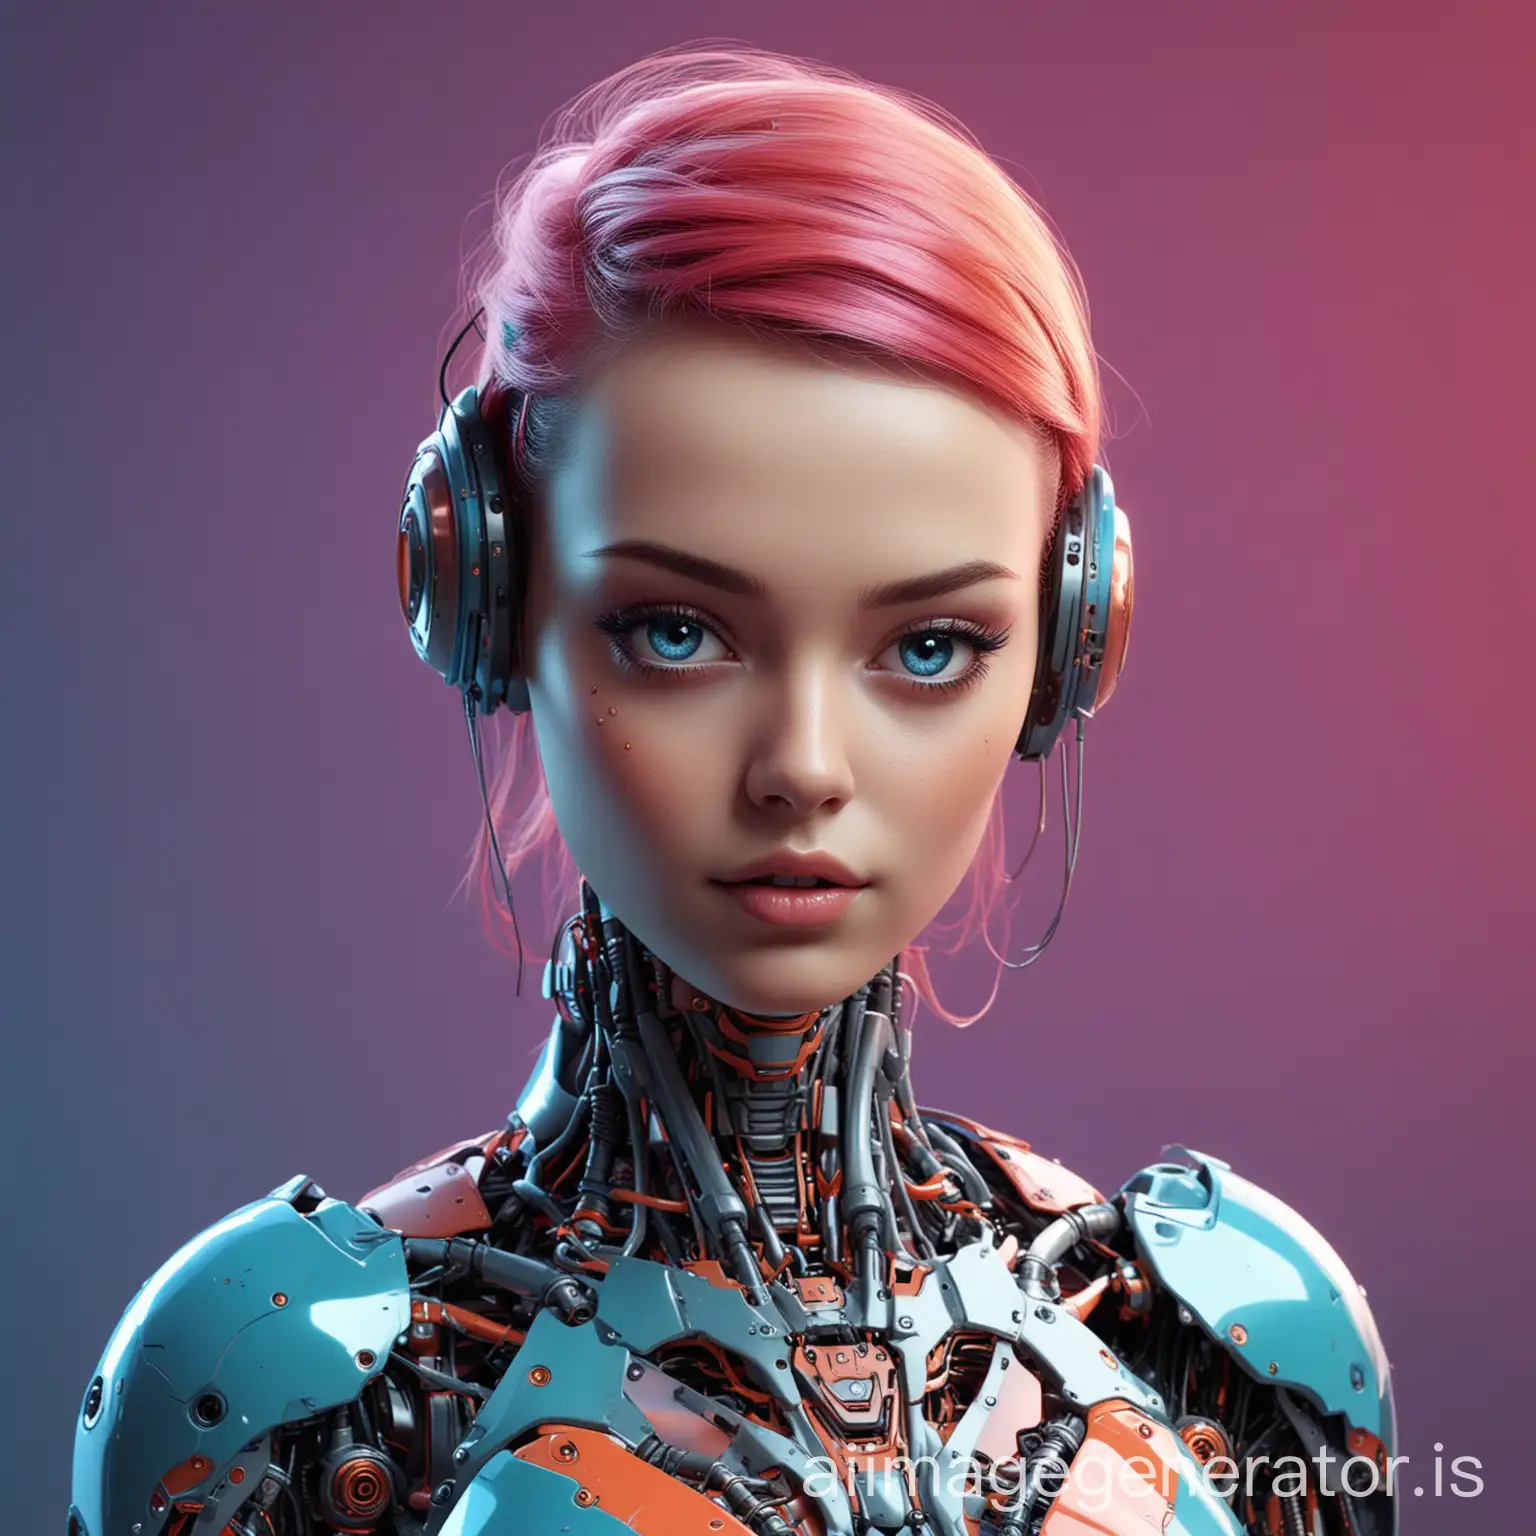 Futuristic-Evil-Robot-Girl-Portrait-in-3D